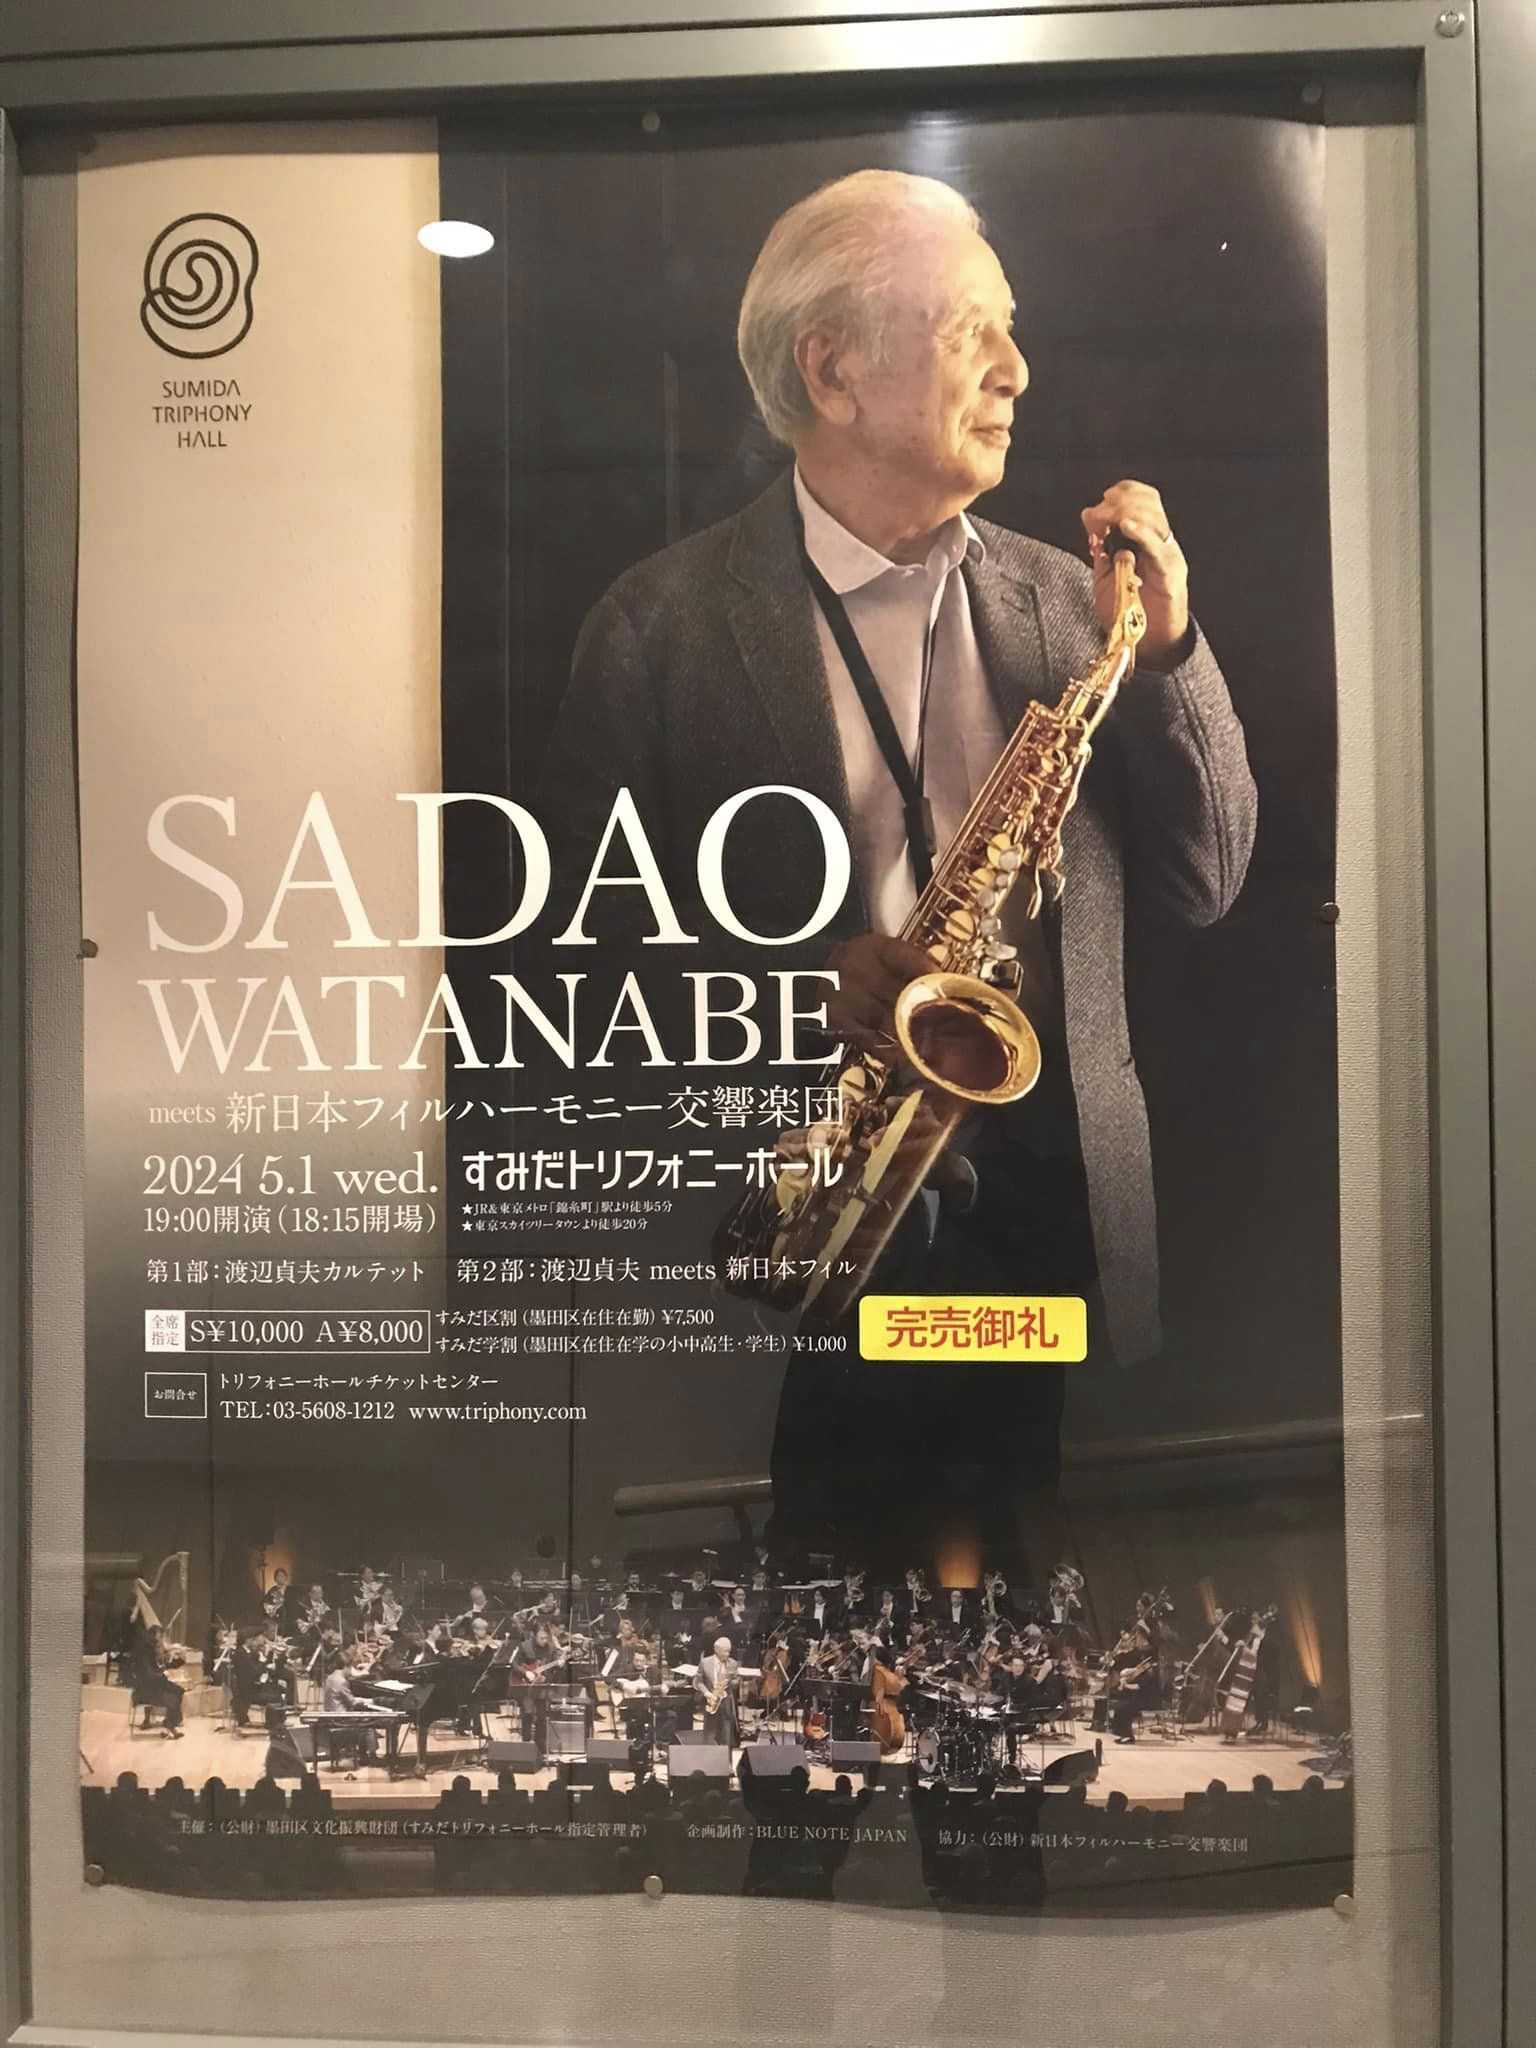 2024/05/01 (水) 渡辺貞夫 Sadao Watanabe meets NEW JAPAN 